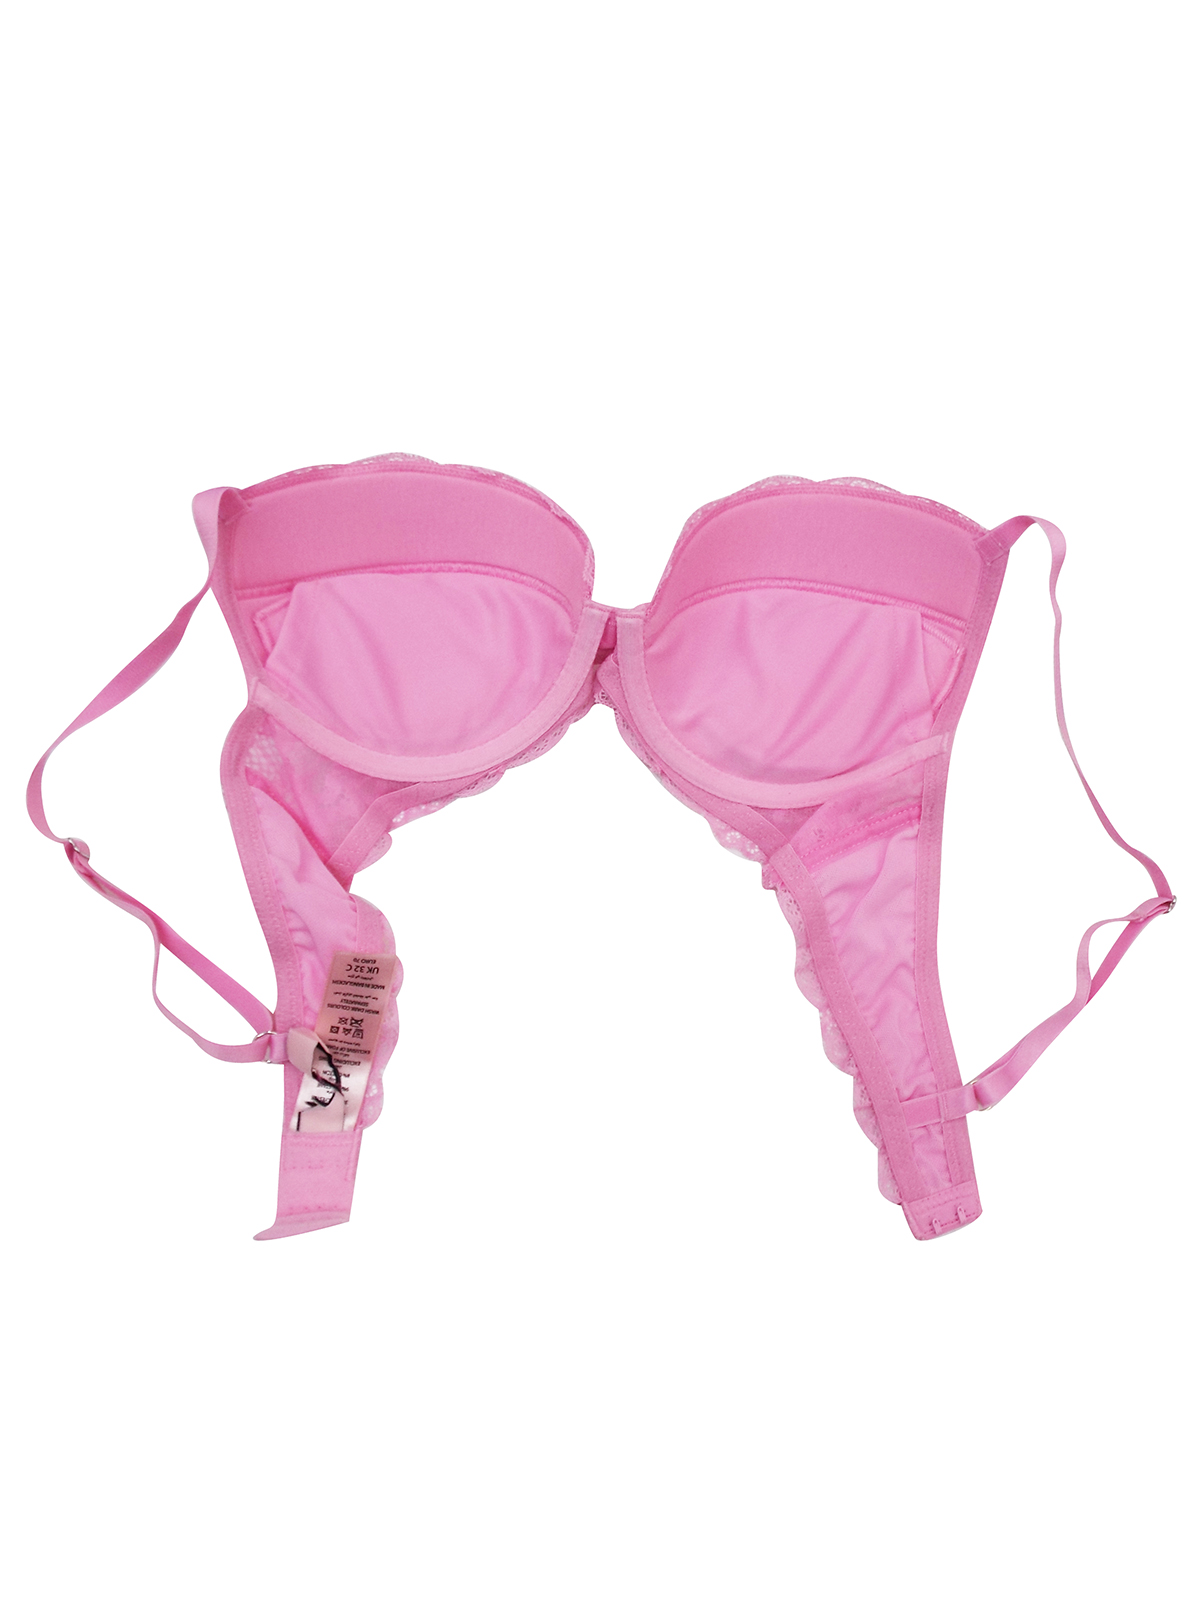 Boux Avenue Arisa plunge bra - Pink - 32C, £18.00